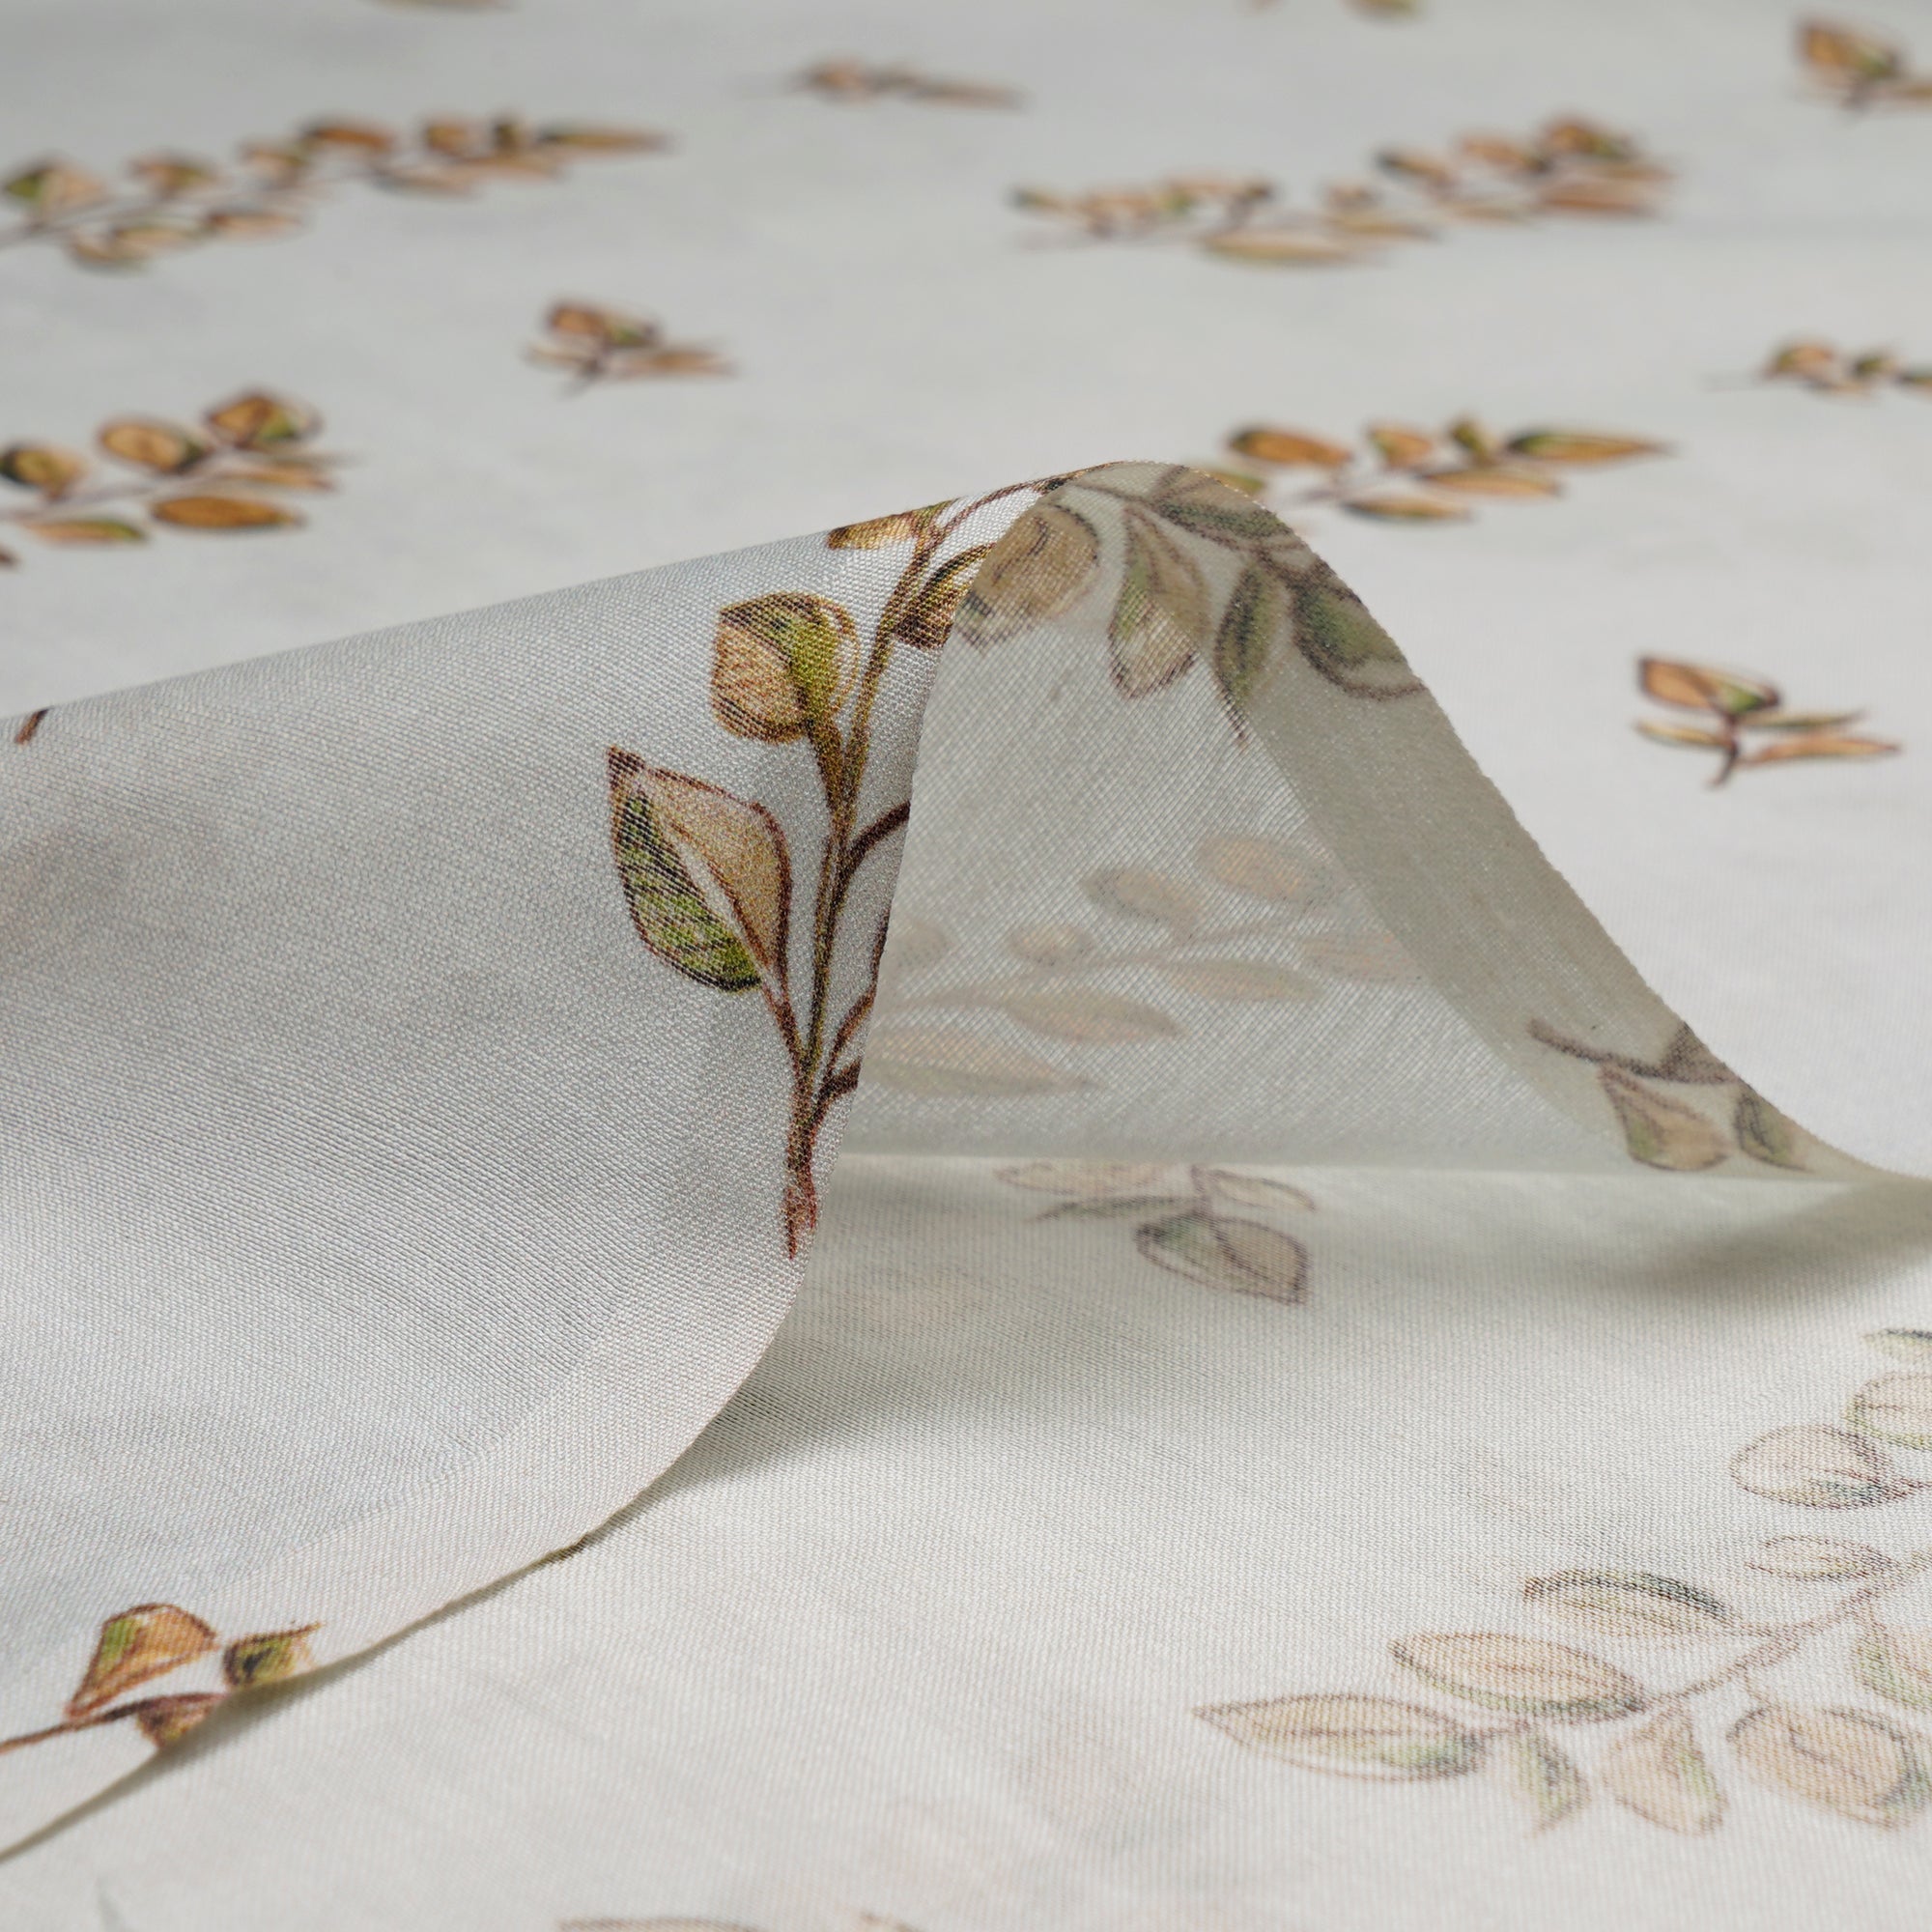 Floral print linen fabric